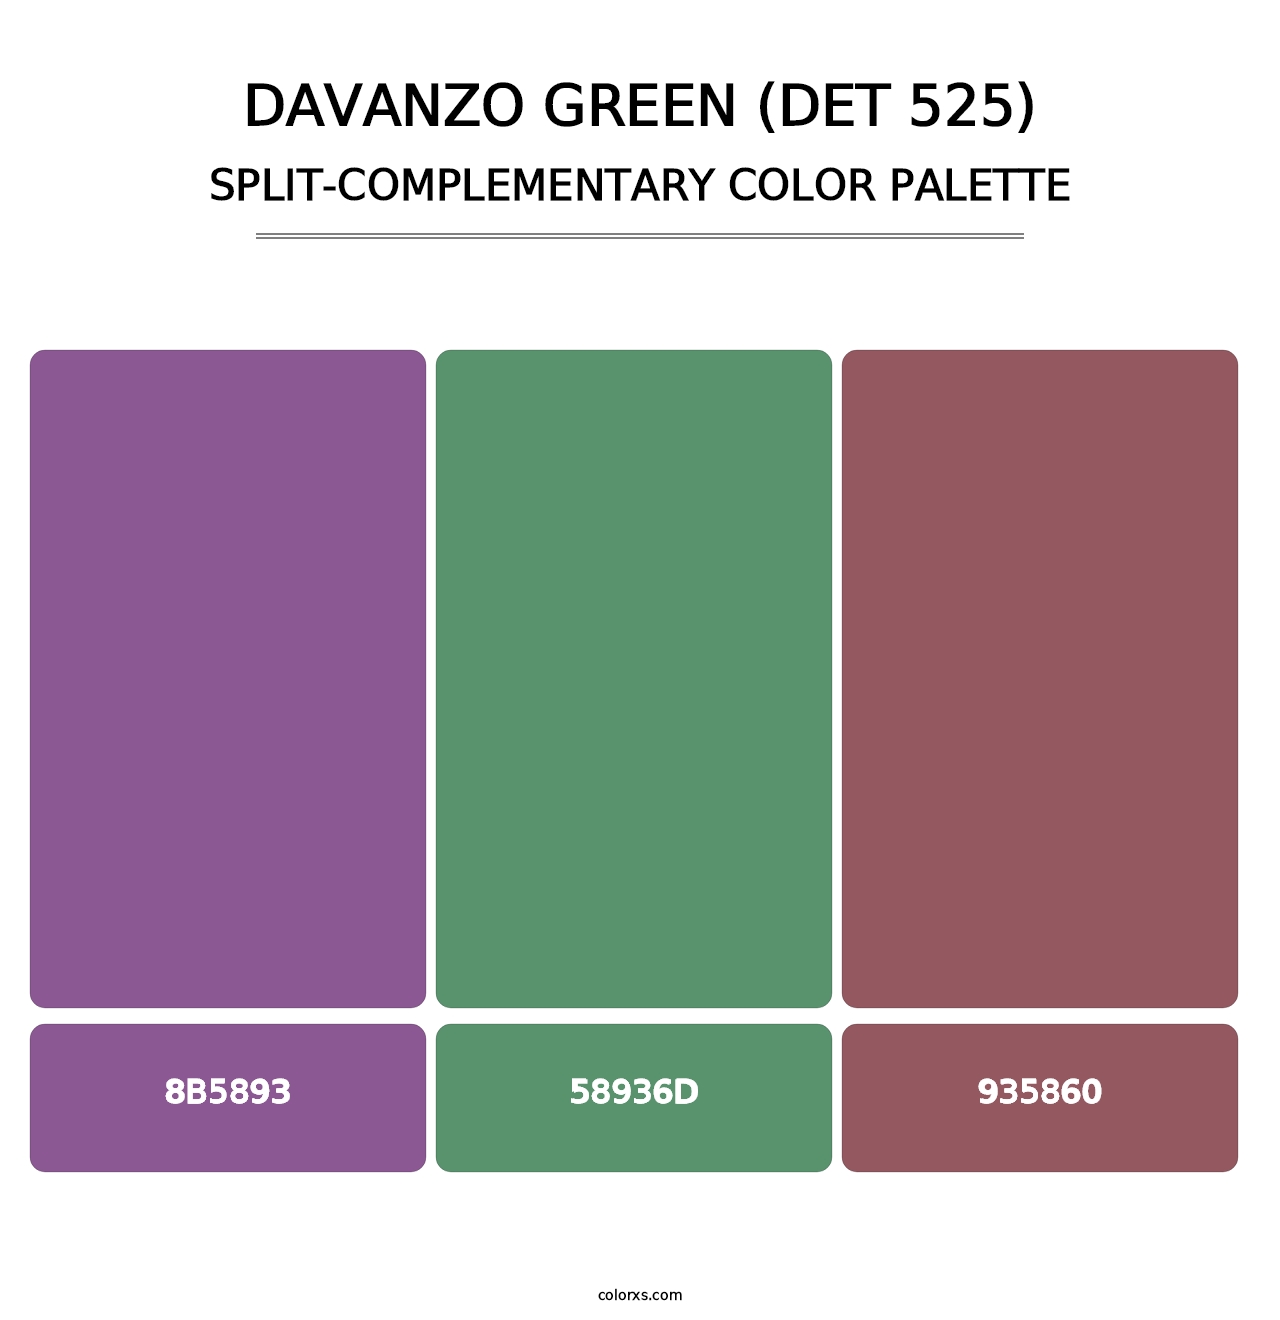 DaVanzo Green (DET 525) - Split-Complementary Color Palette